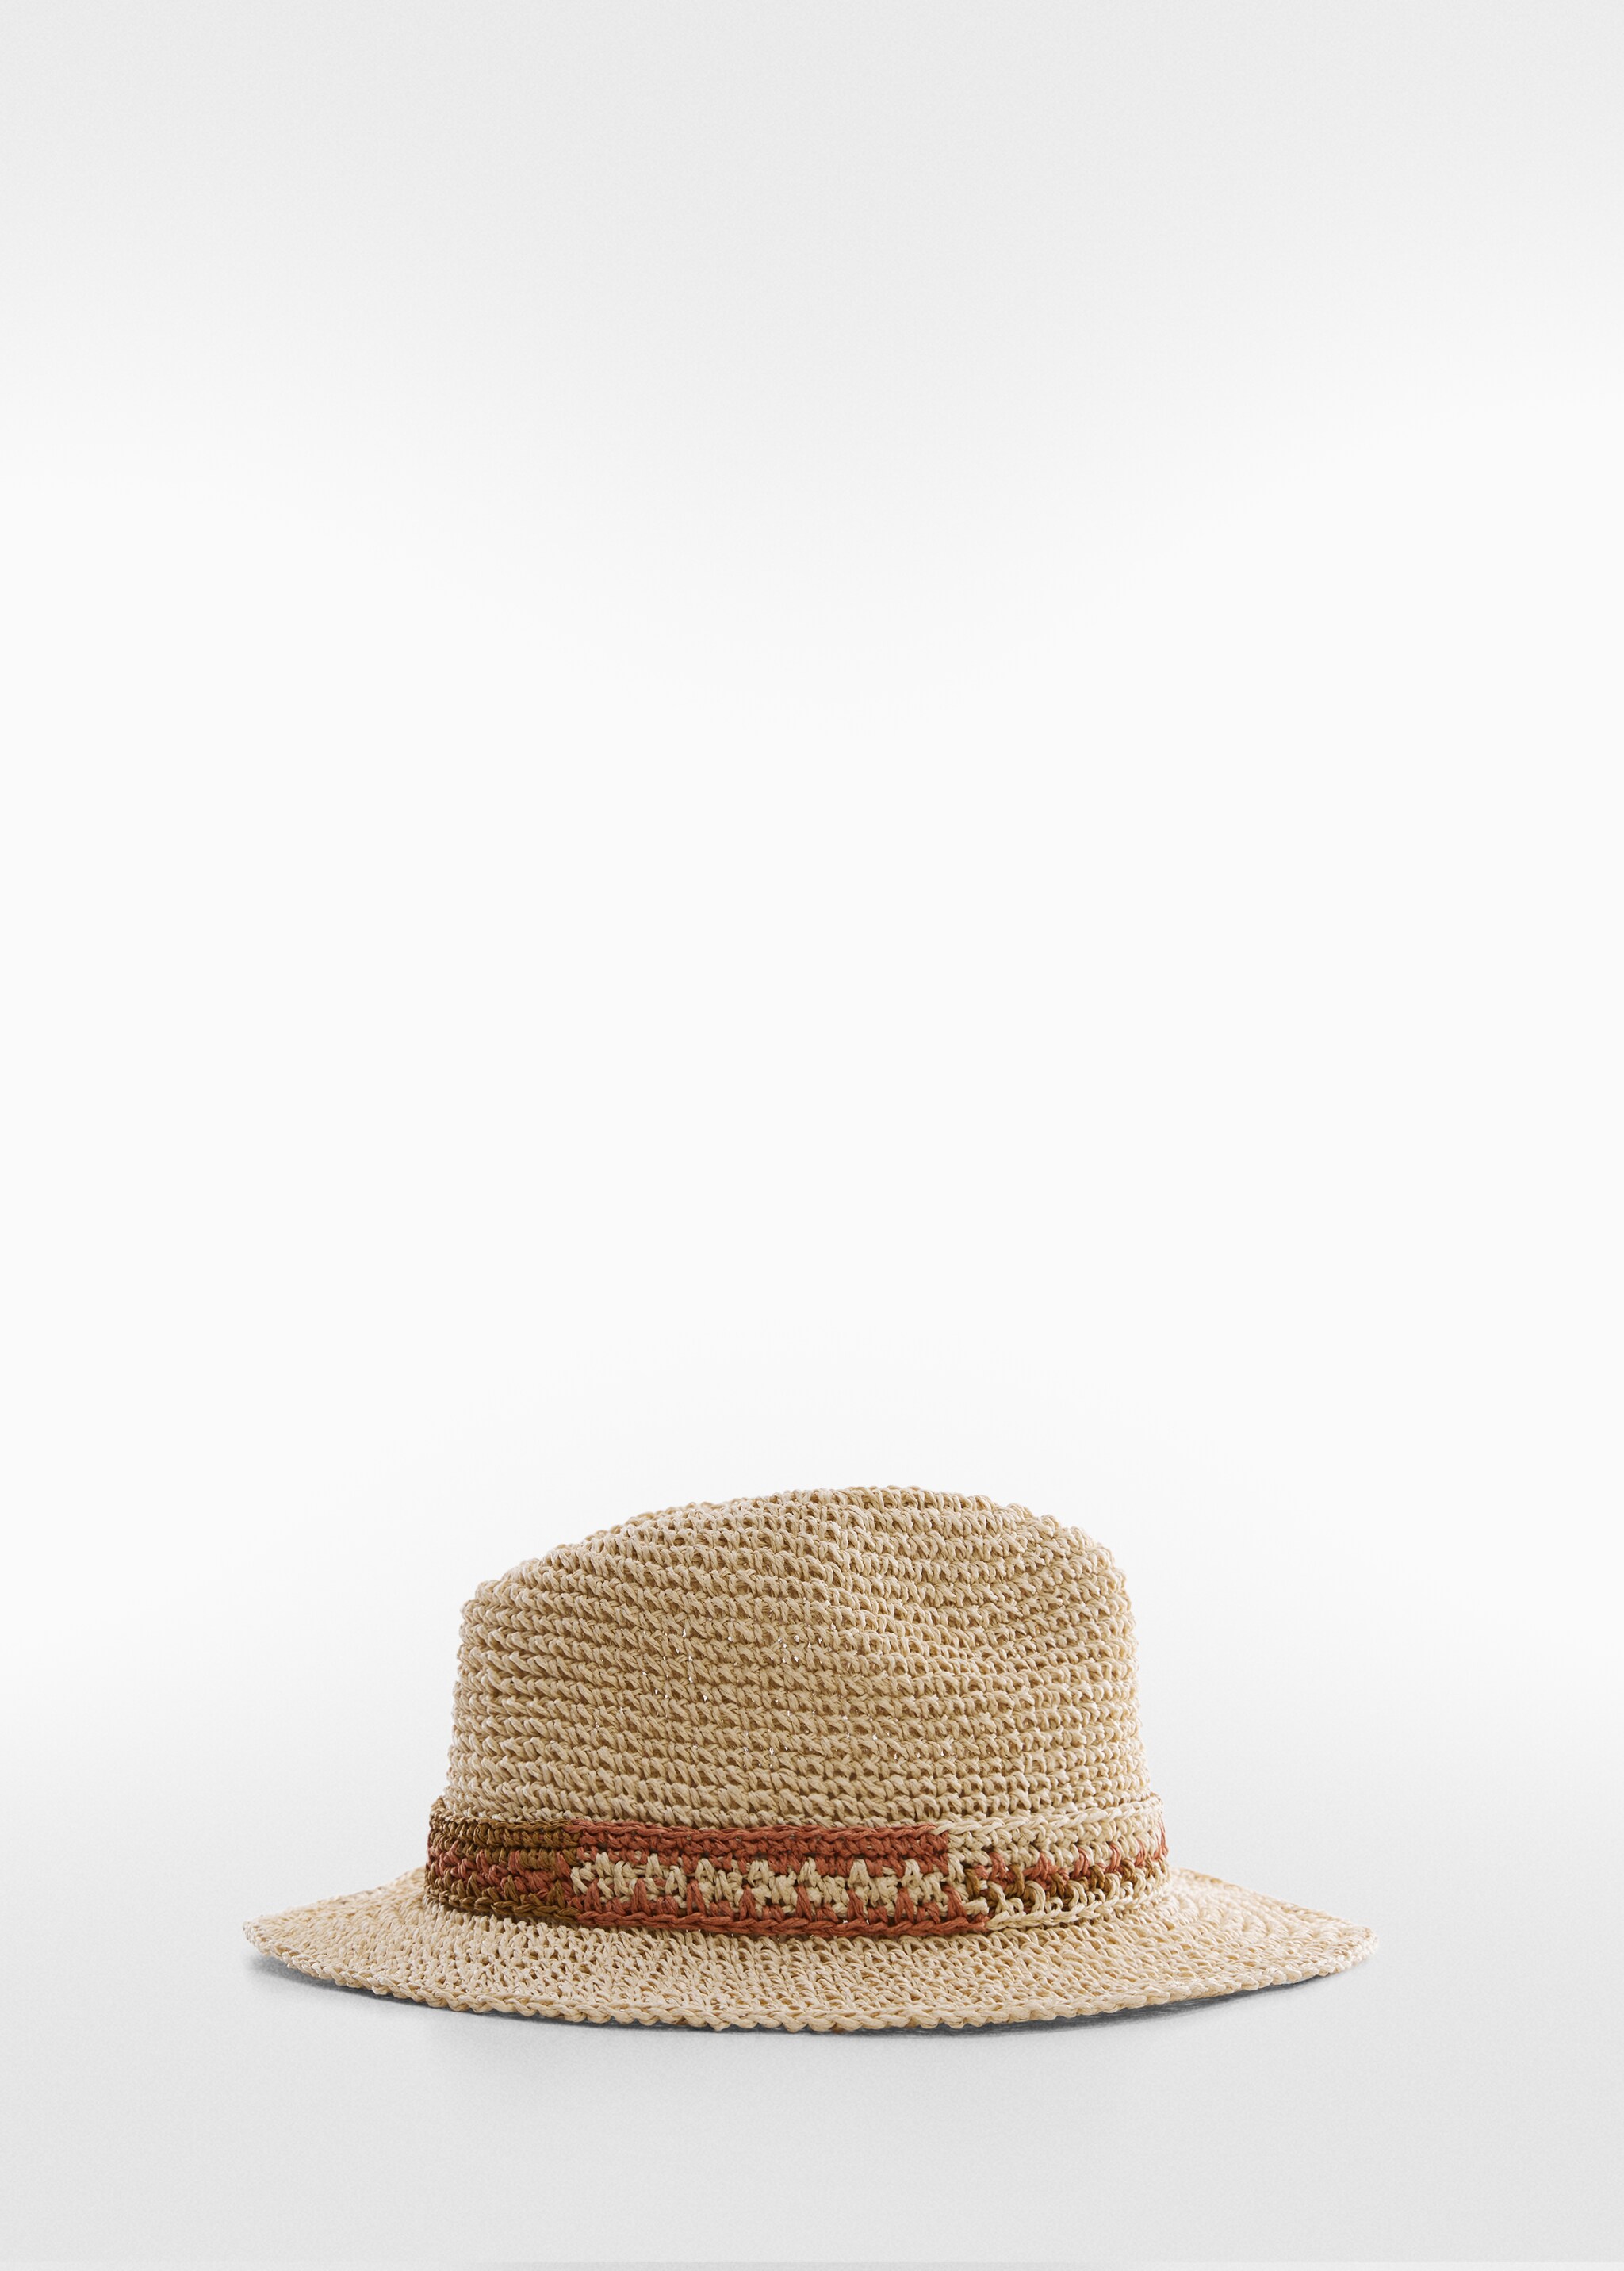 Natural fibre hat - Article without model